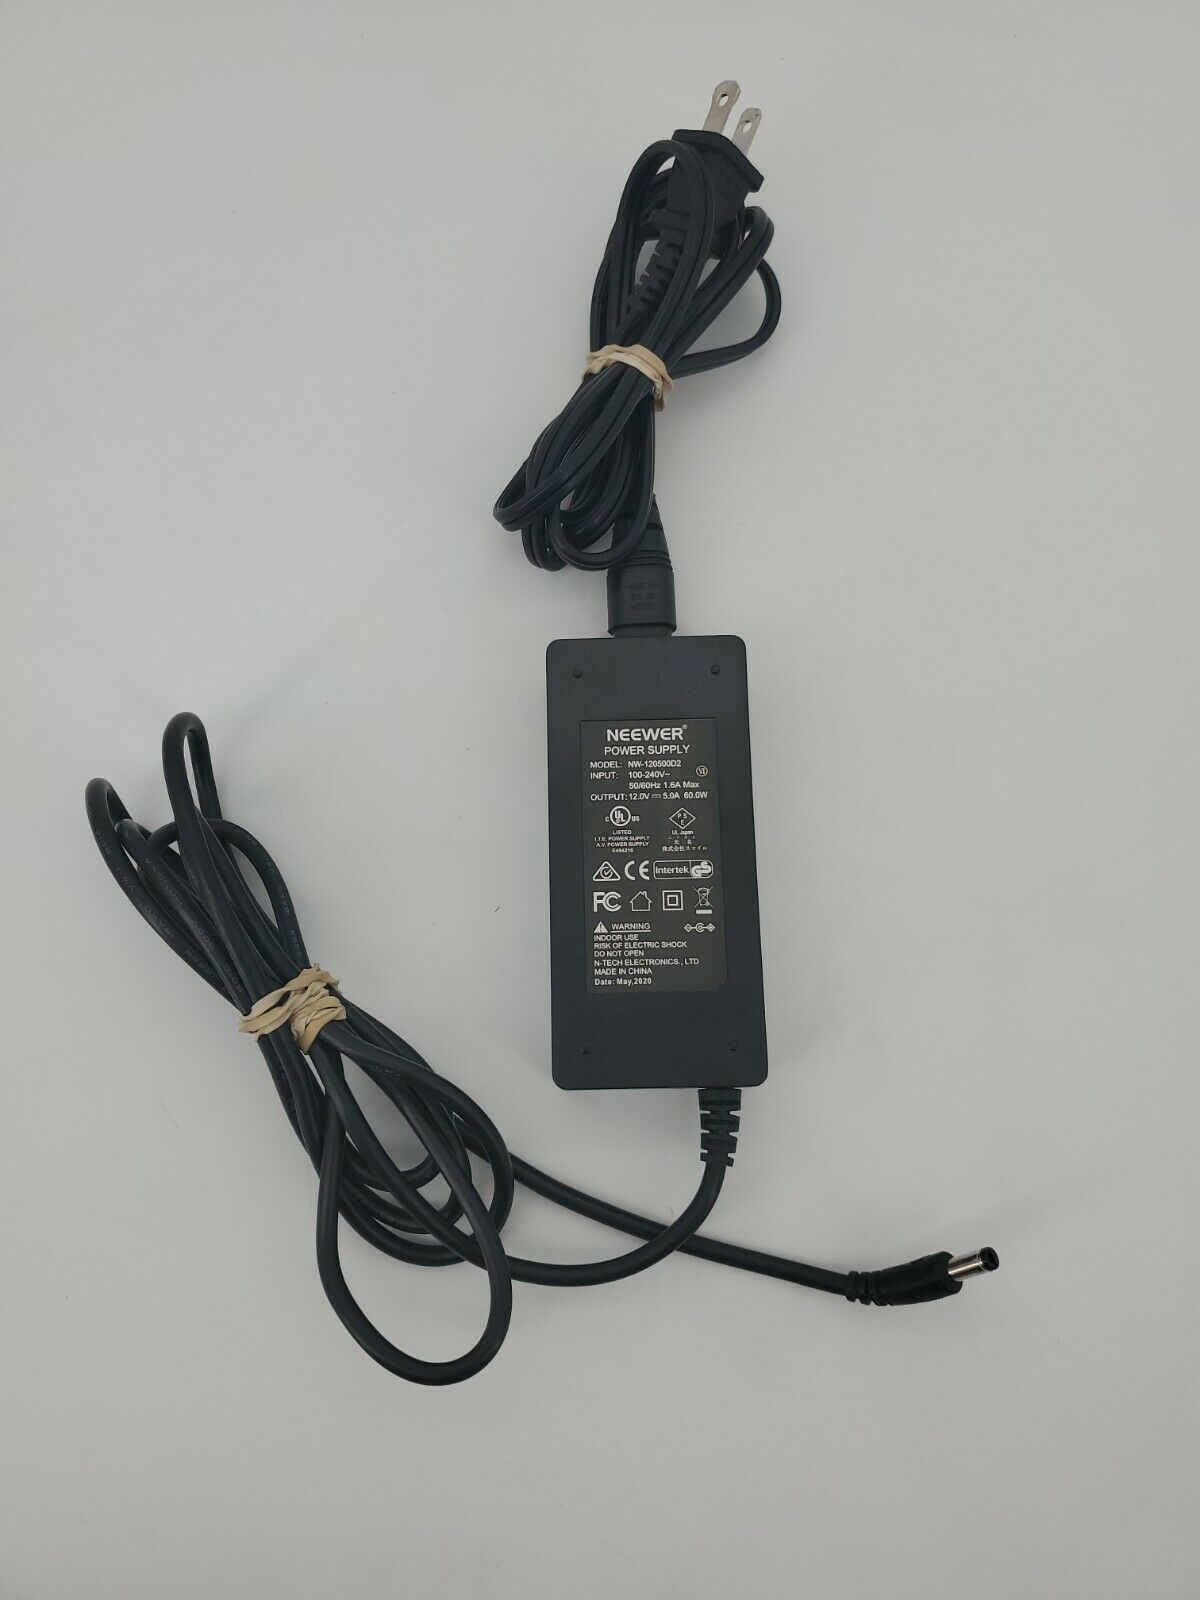 Neewer Power Adapter Model NW-1205500D2 Indoor Use Type: Adapter Features: ne